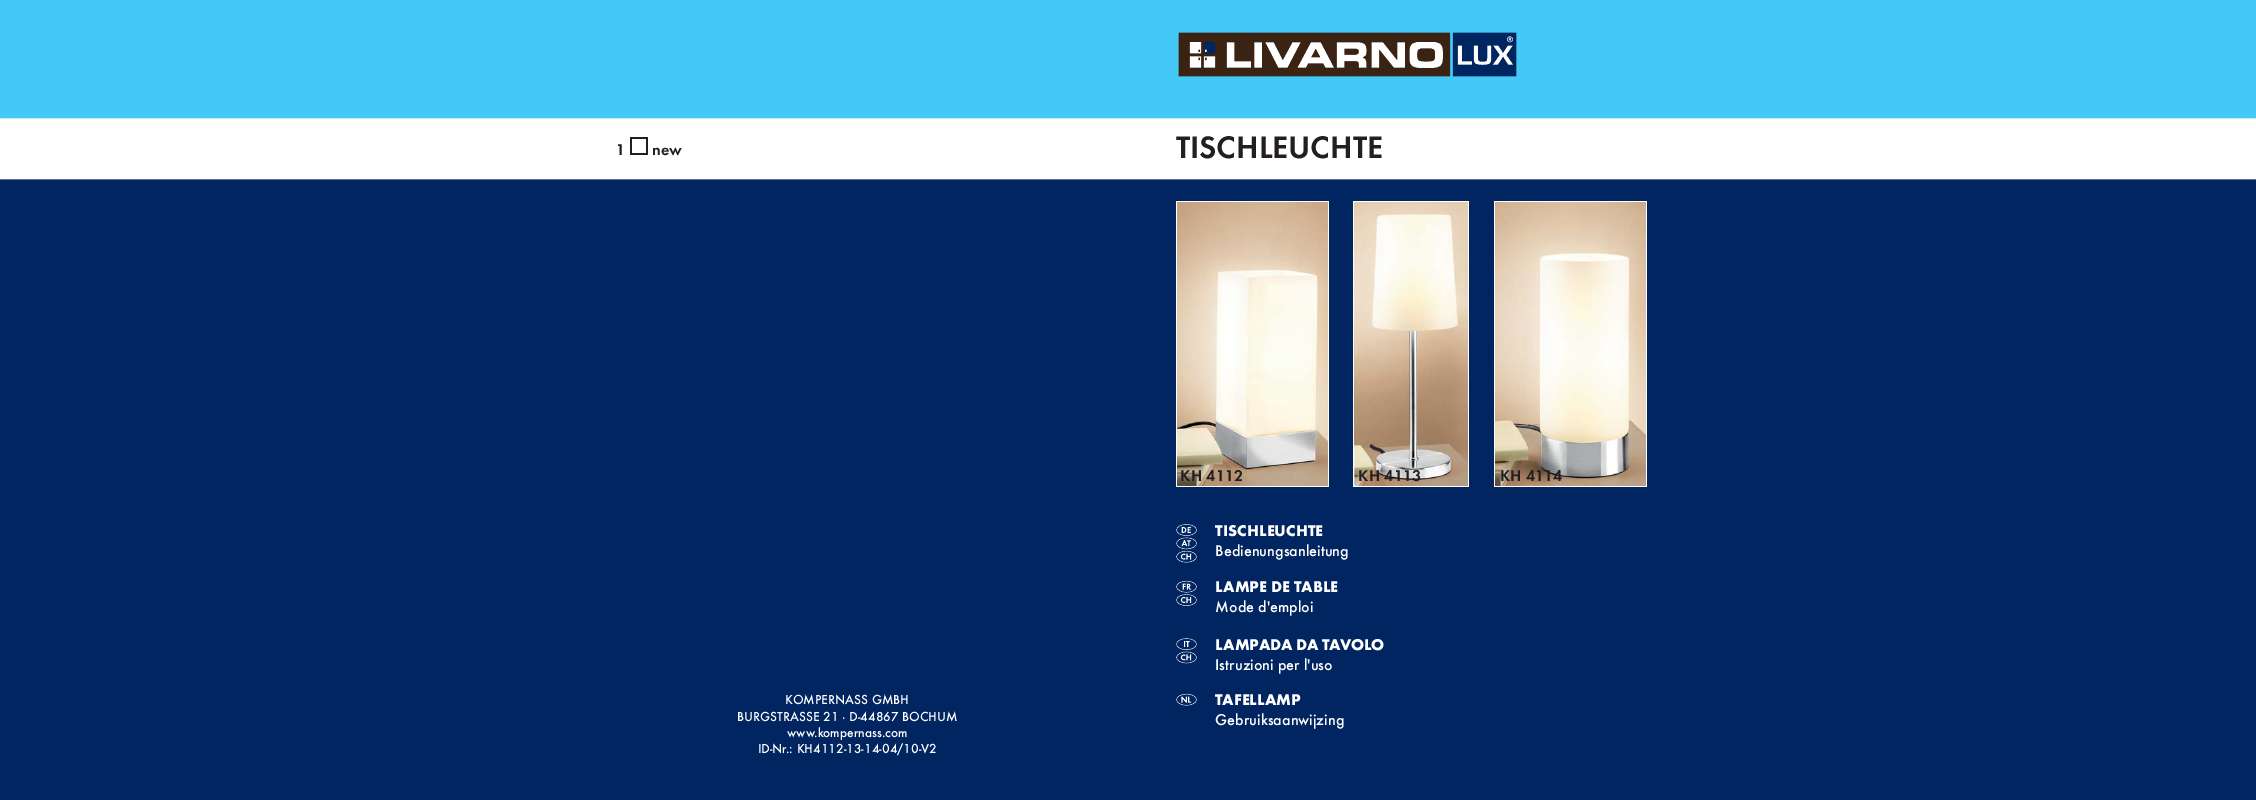 Guide utilisation  LIVARNO KH 4112-4114 TABLE LAMP  de la marque LIVARNO